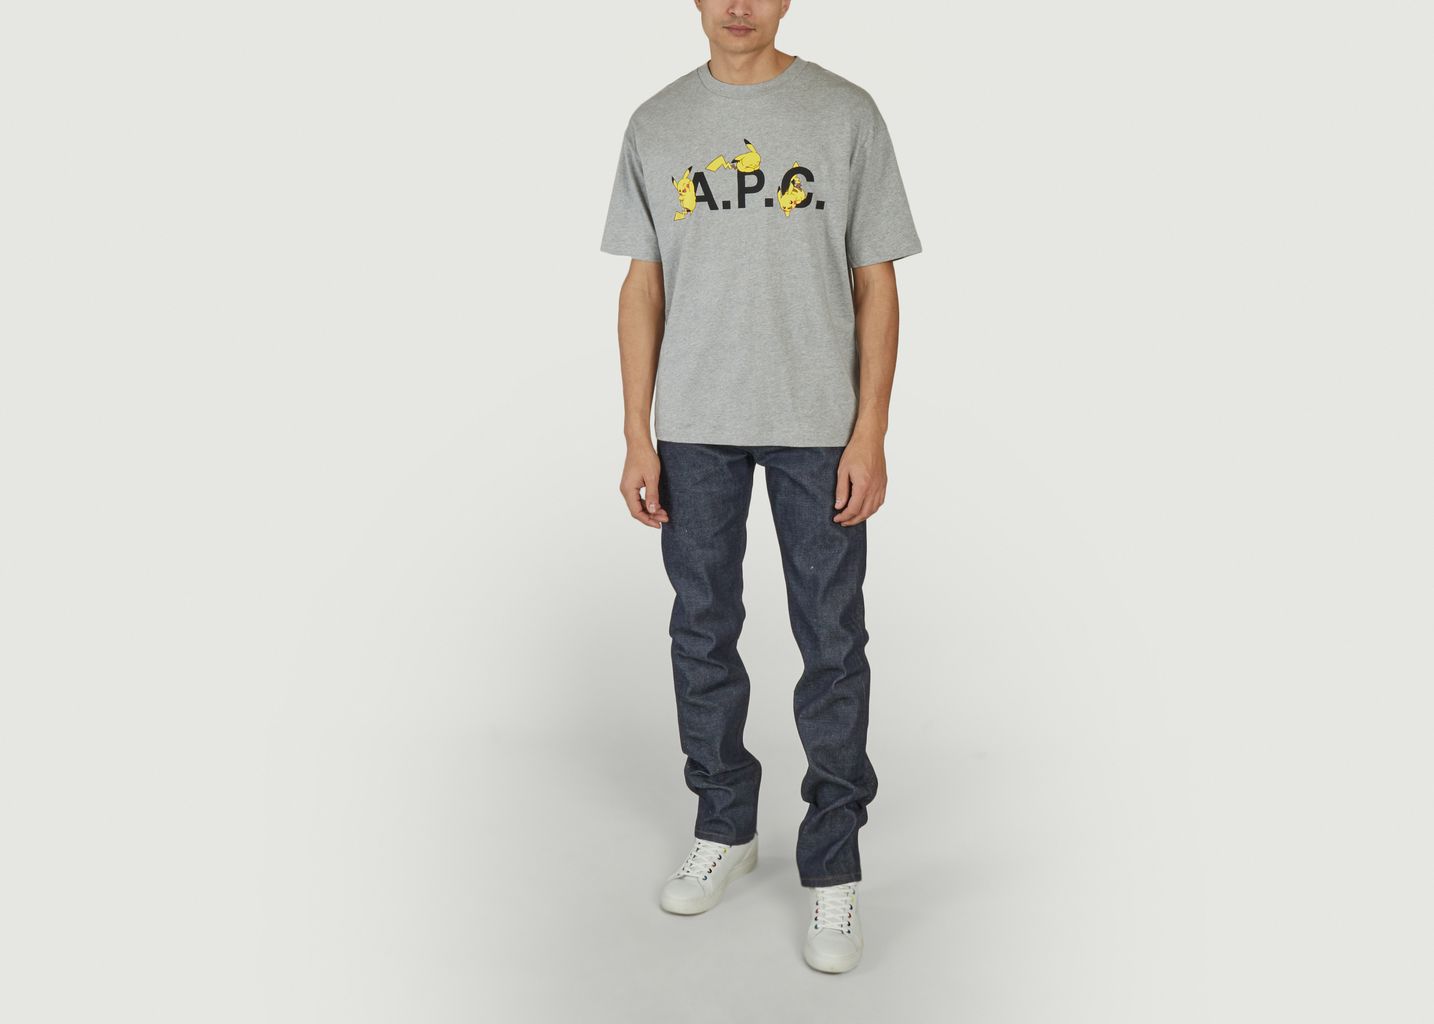 New Standard straight jeans with Pokémon x A.P.C. patch - A.P.C.